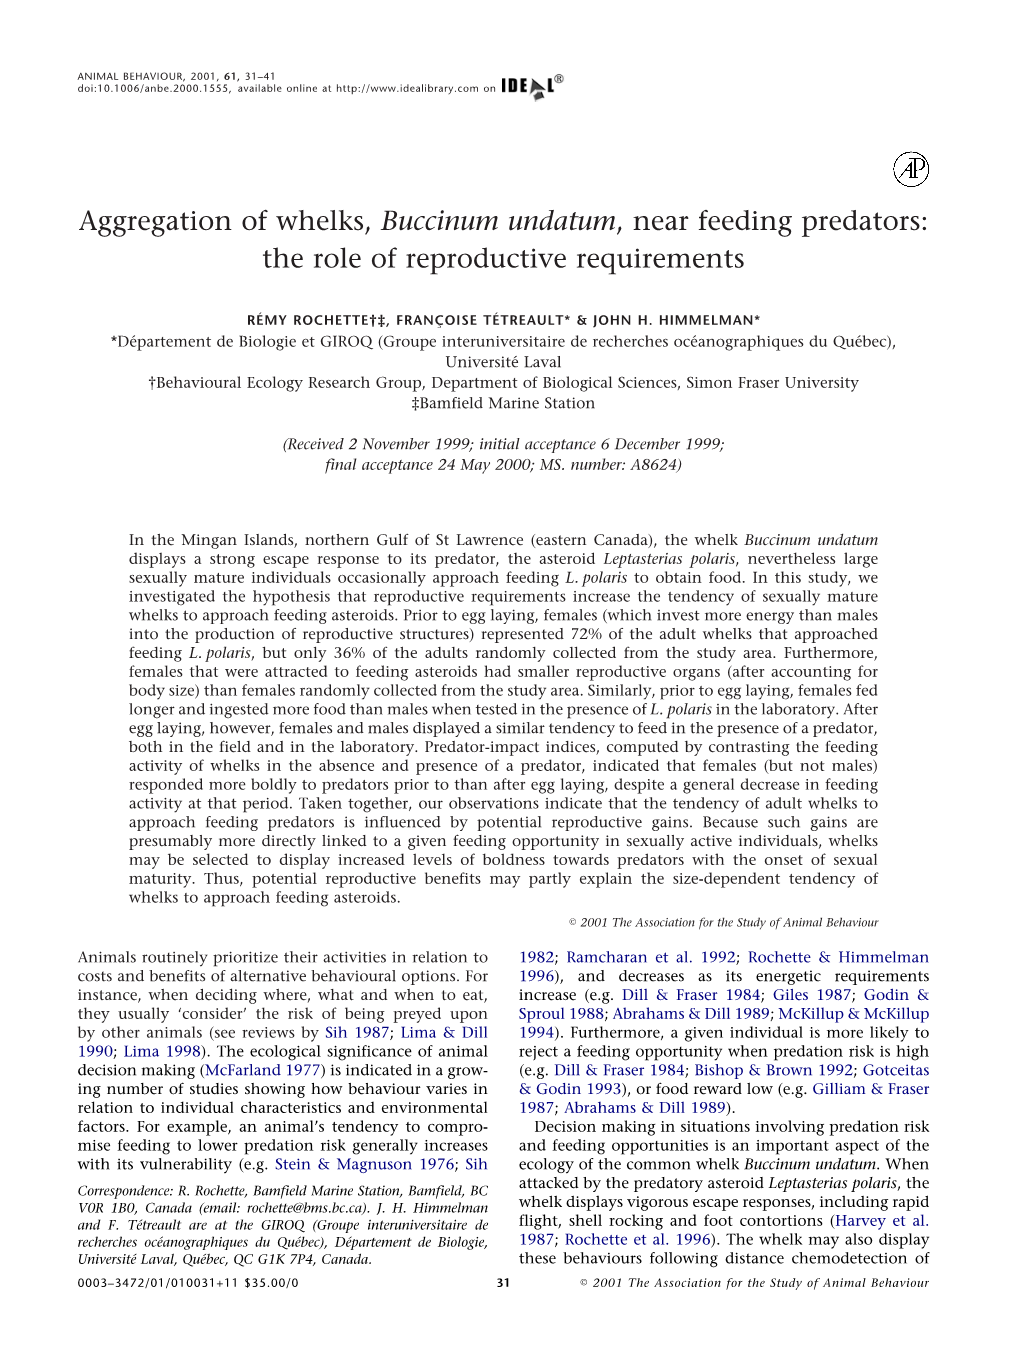 Aggregation of Whelks, Buccinum Undatum, Near Feeding Predators: the Role of Reproductive Requirements